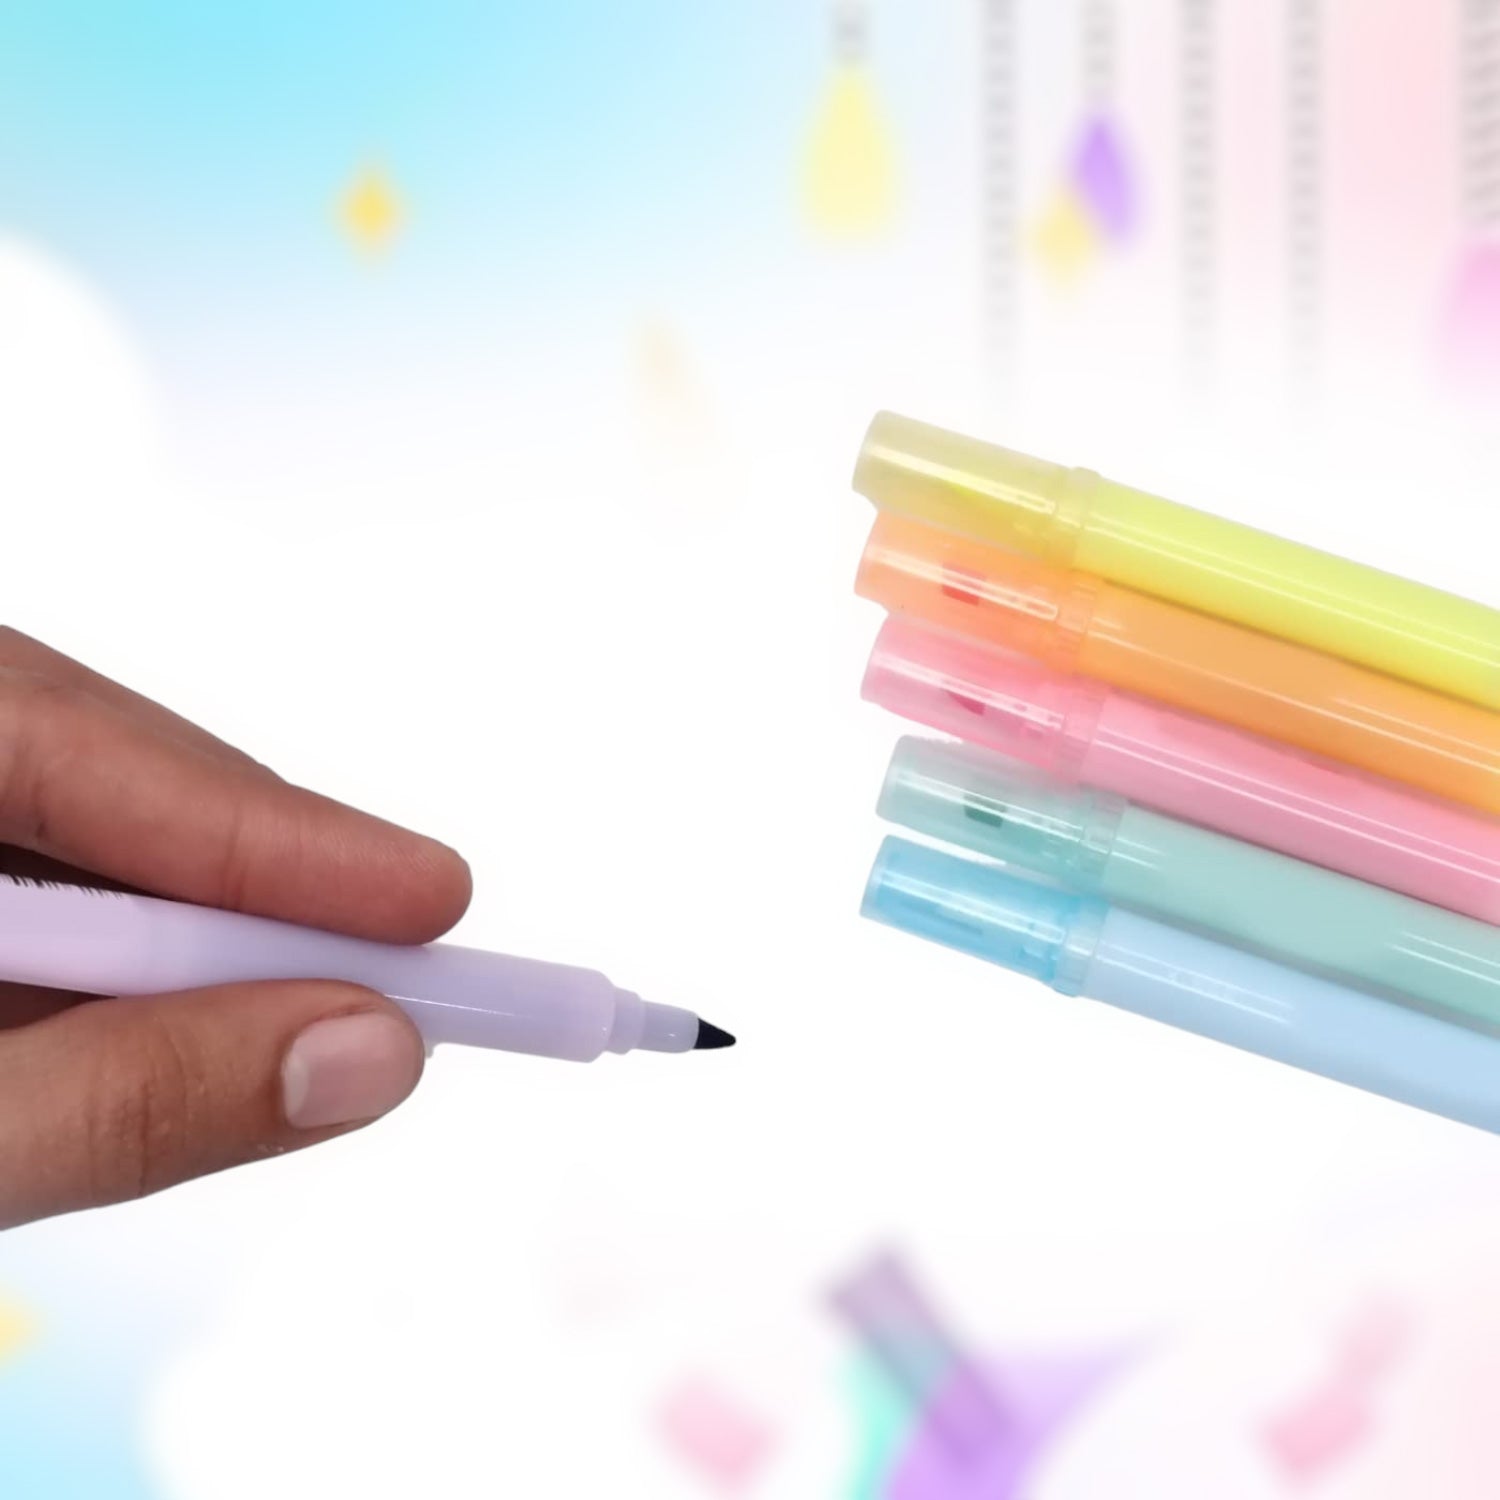 Highlighters | Double Headed Erasable Marker Pen Hi-lighters - for Girls, Boys, School, Crafts, Drawing, Birthday Gift & Return Gifts - Apkamart